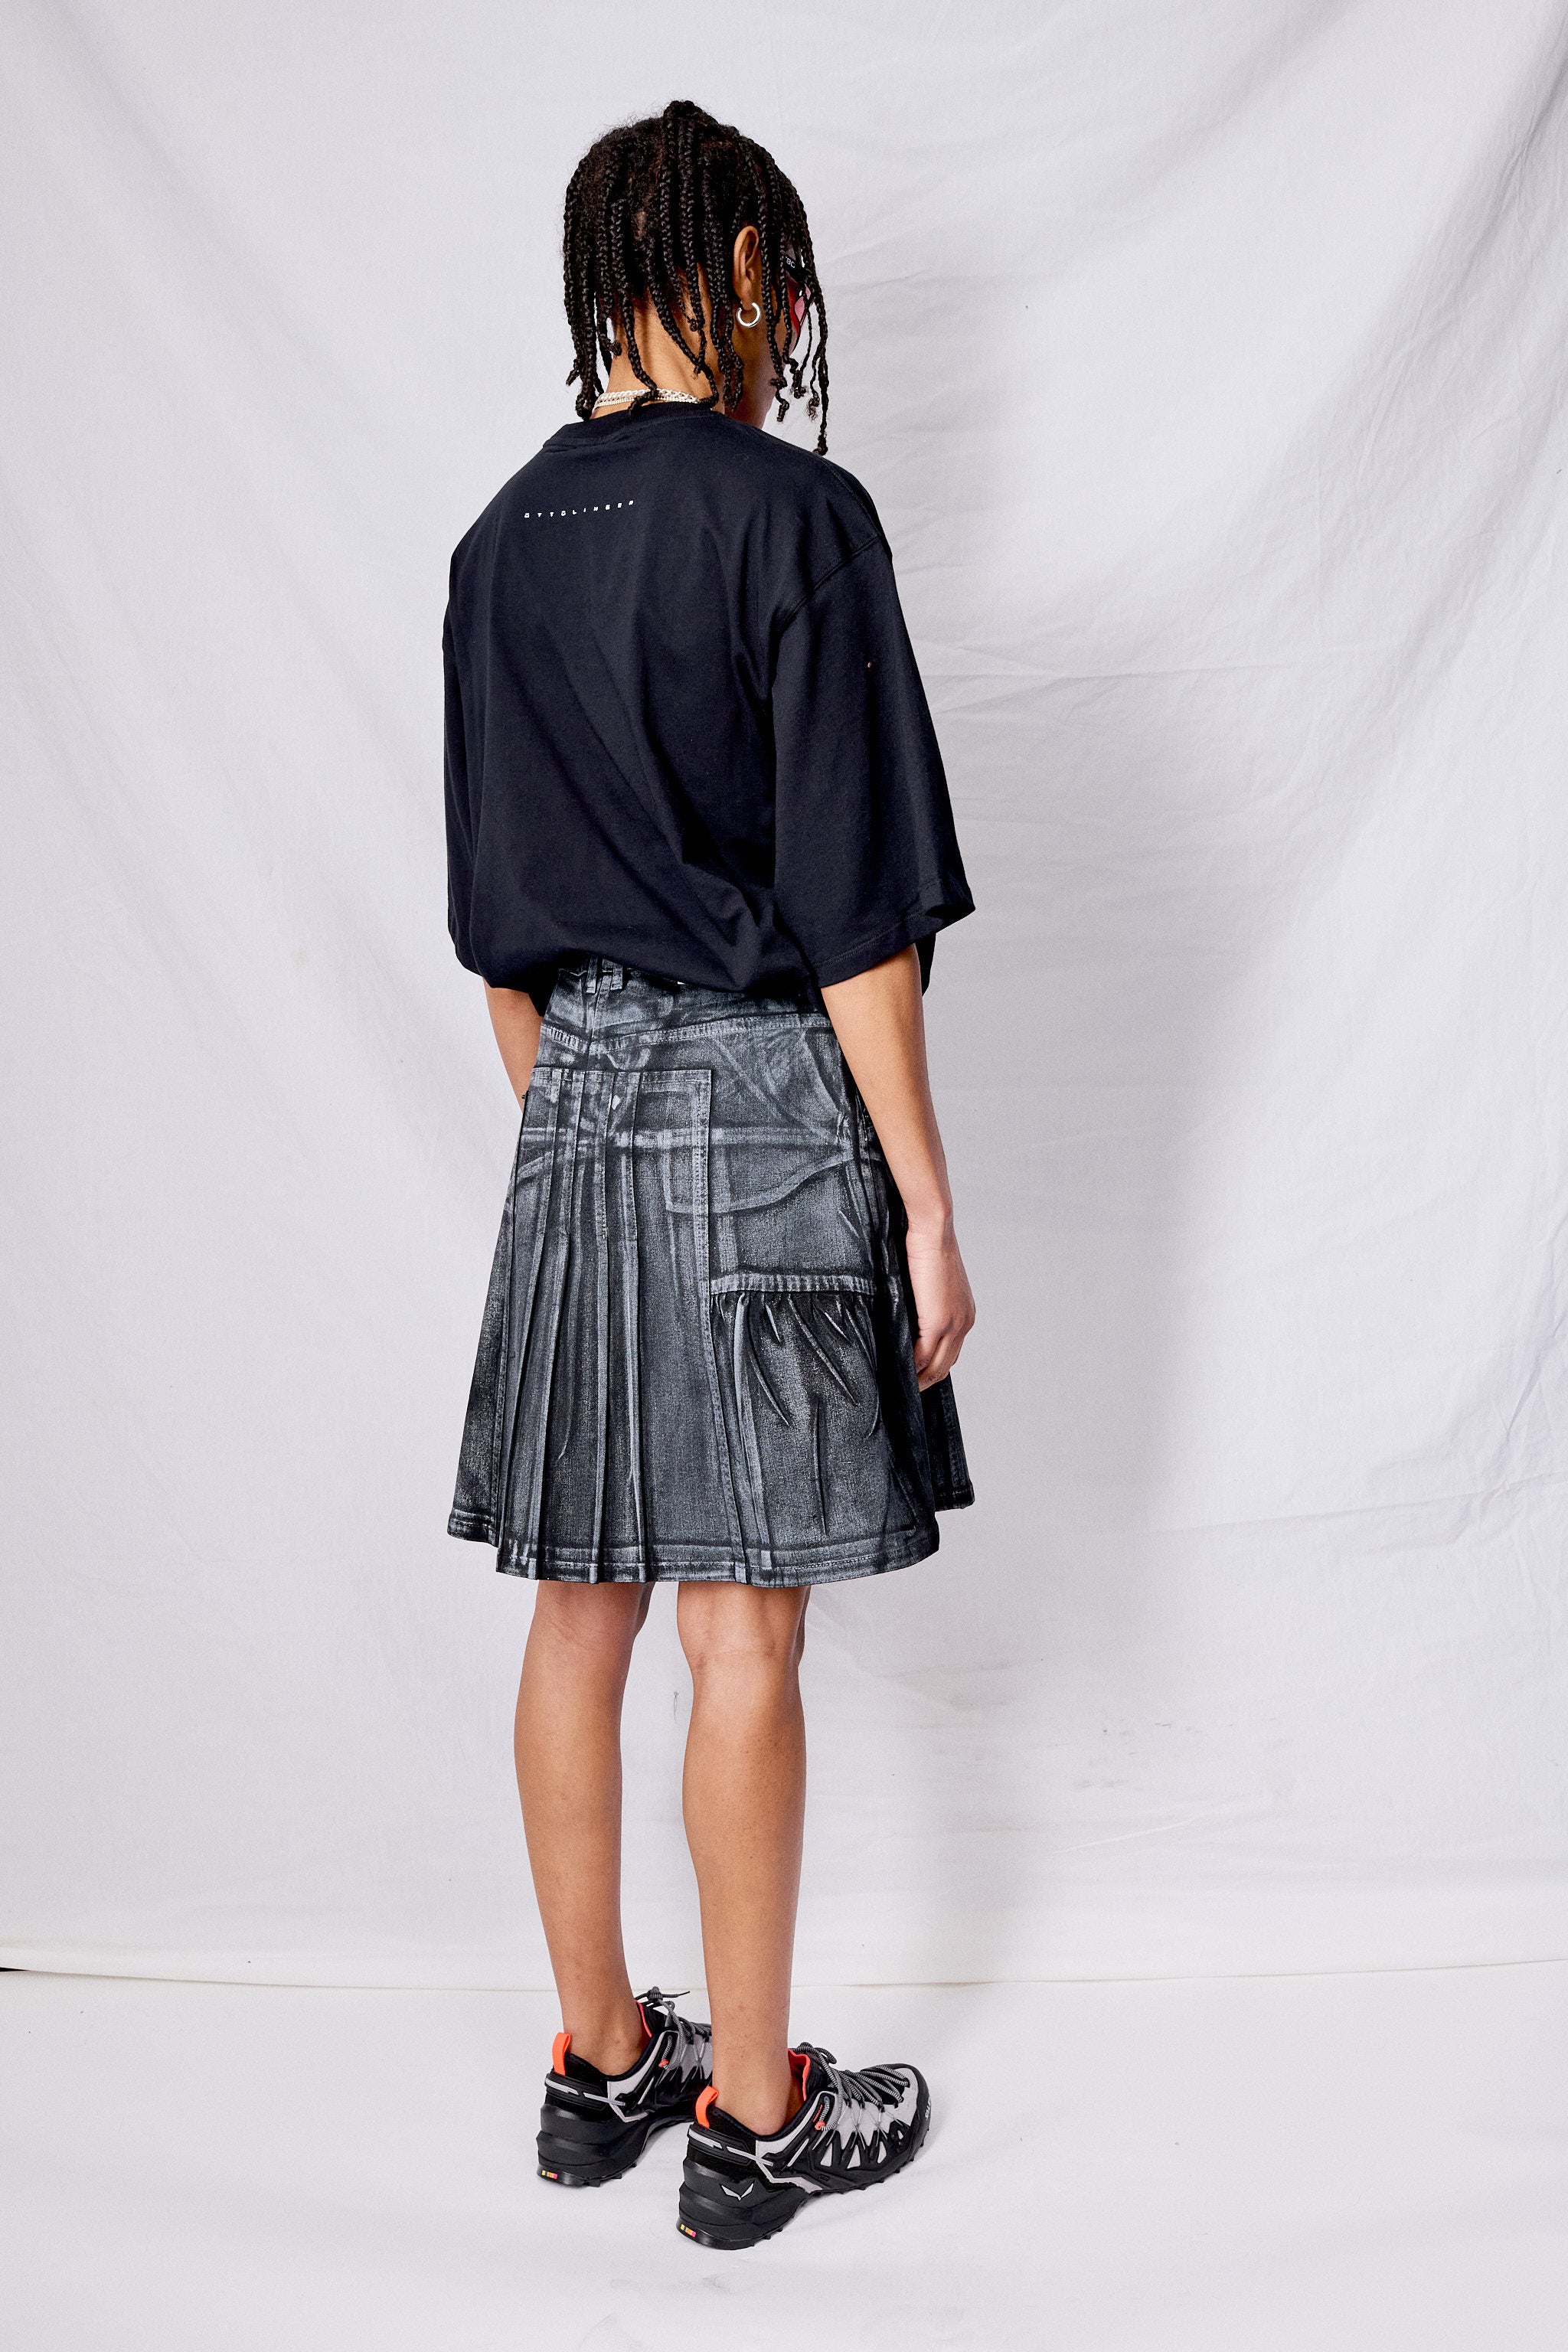 Black/White Paint Midi Skirt